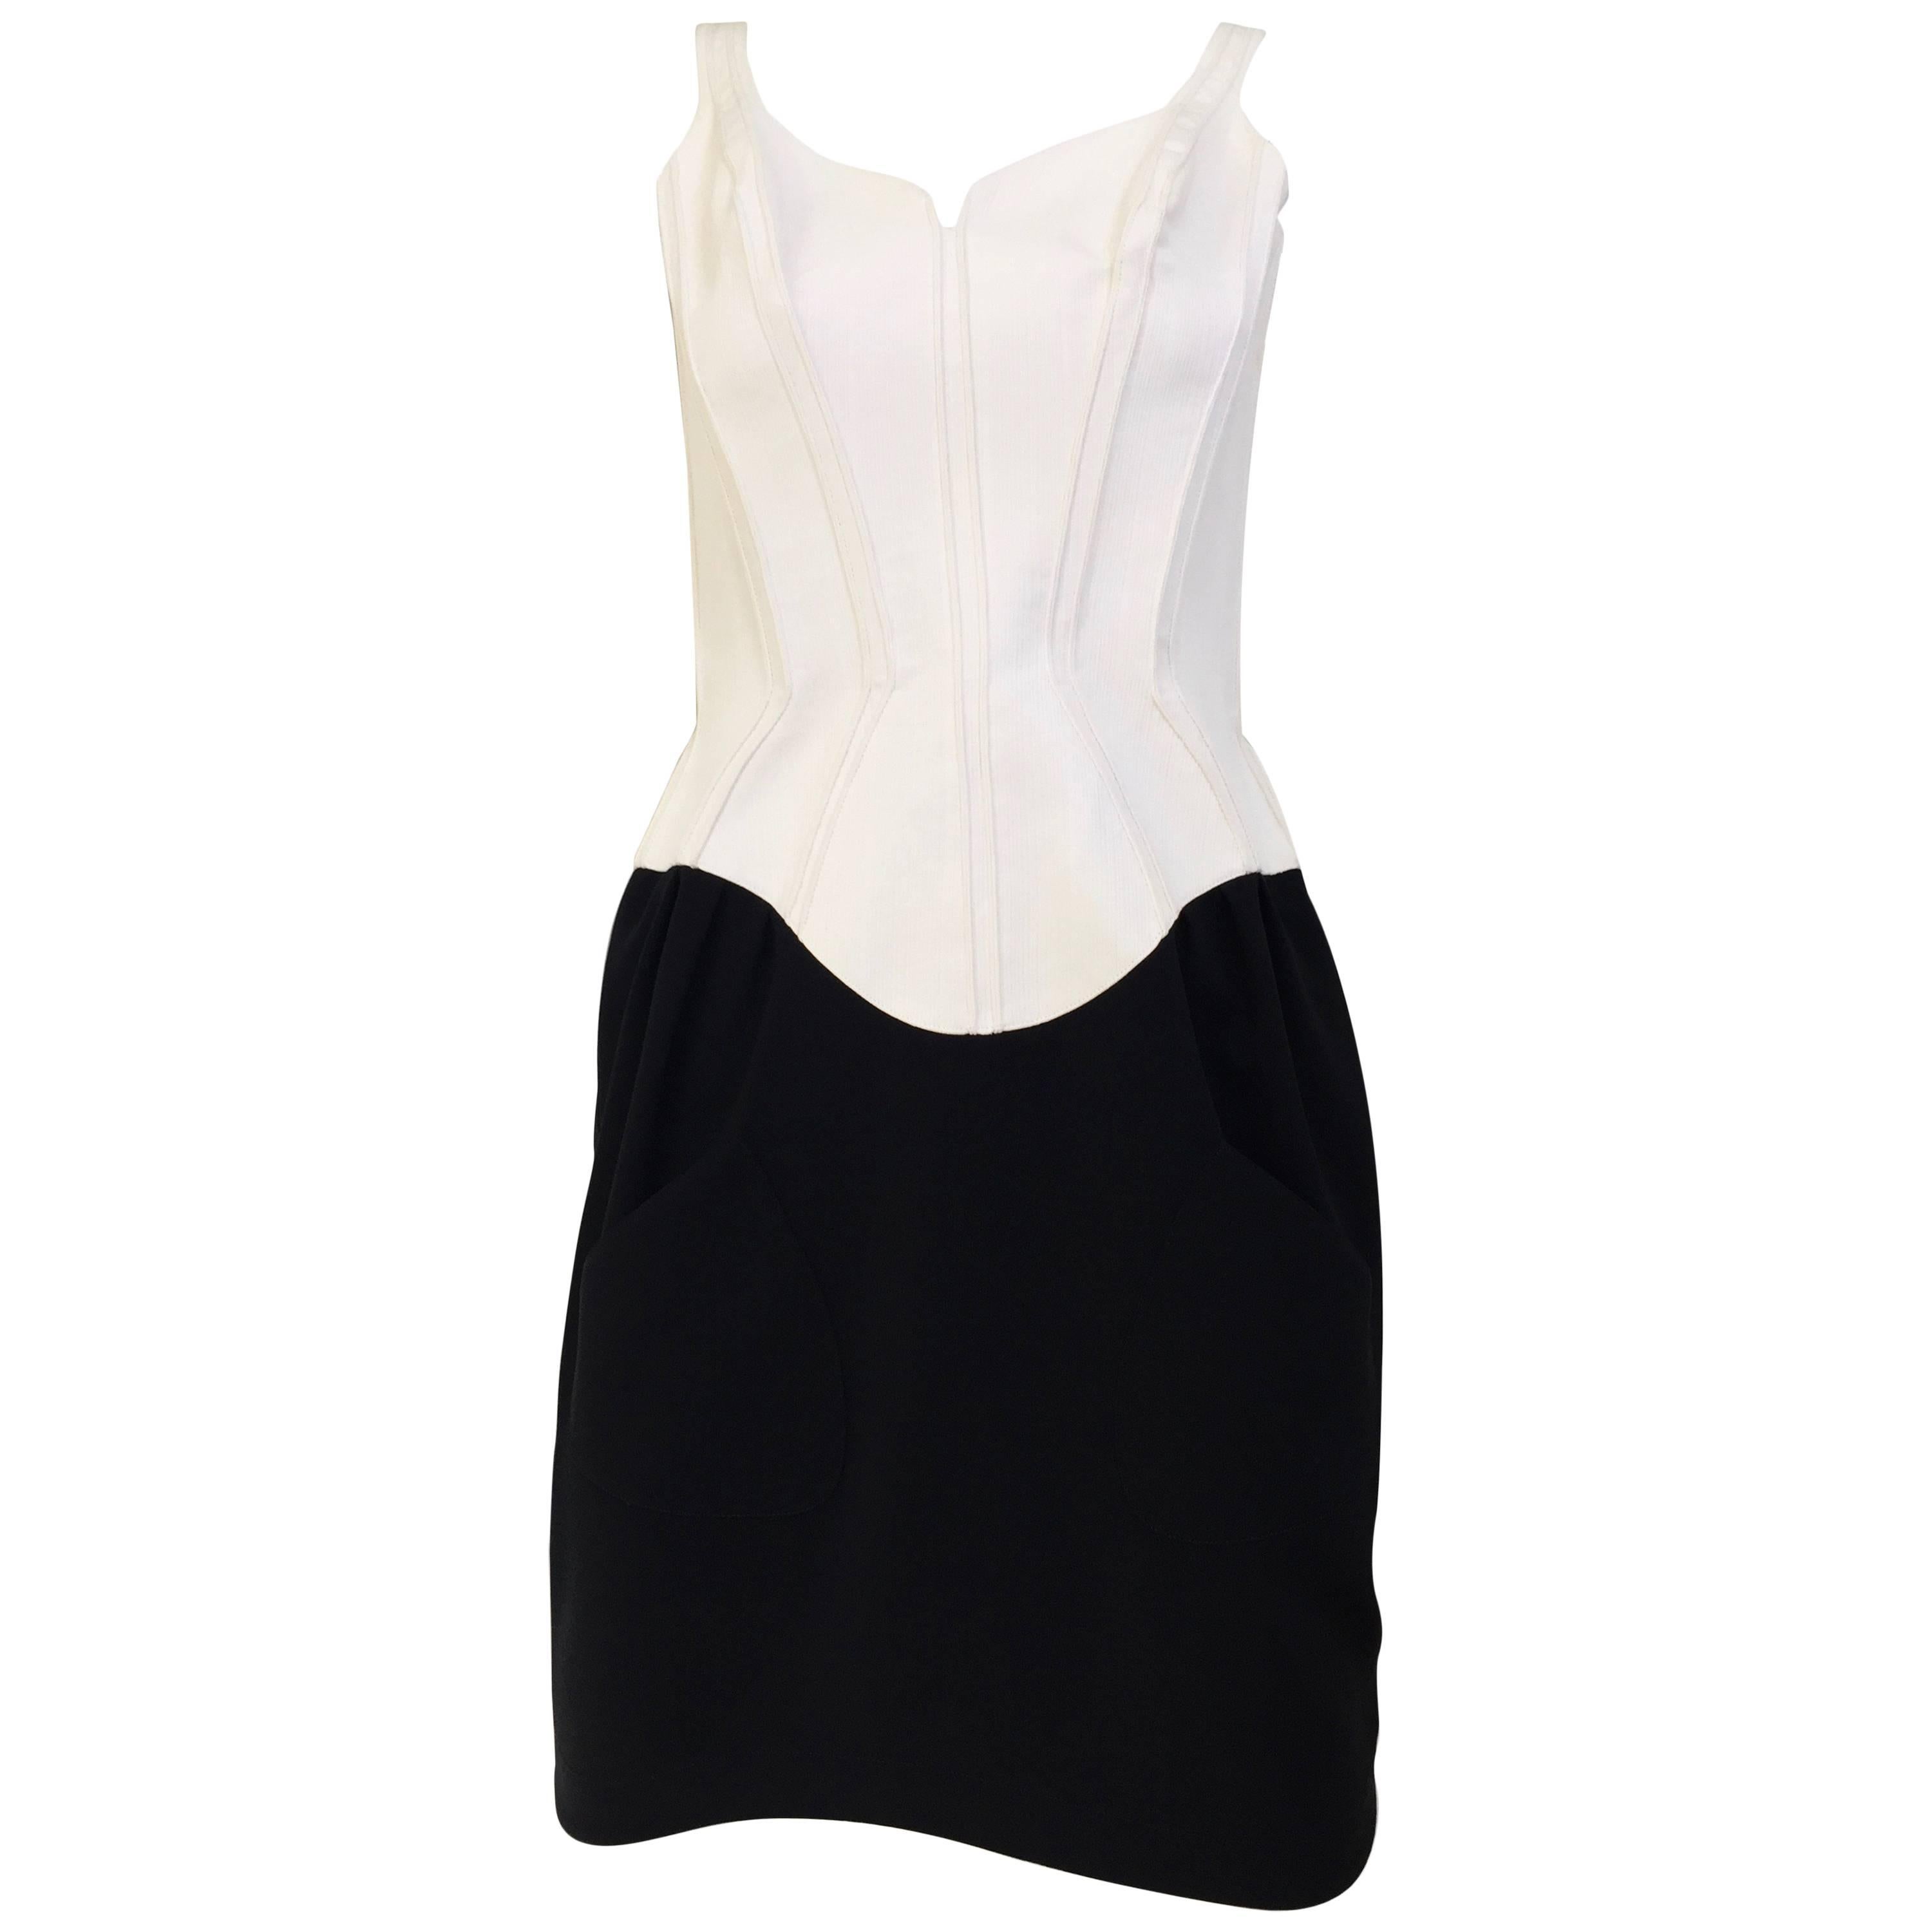 Buy > mugler black and white dress > in stock